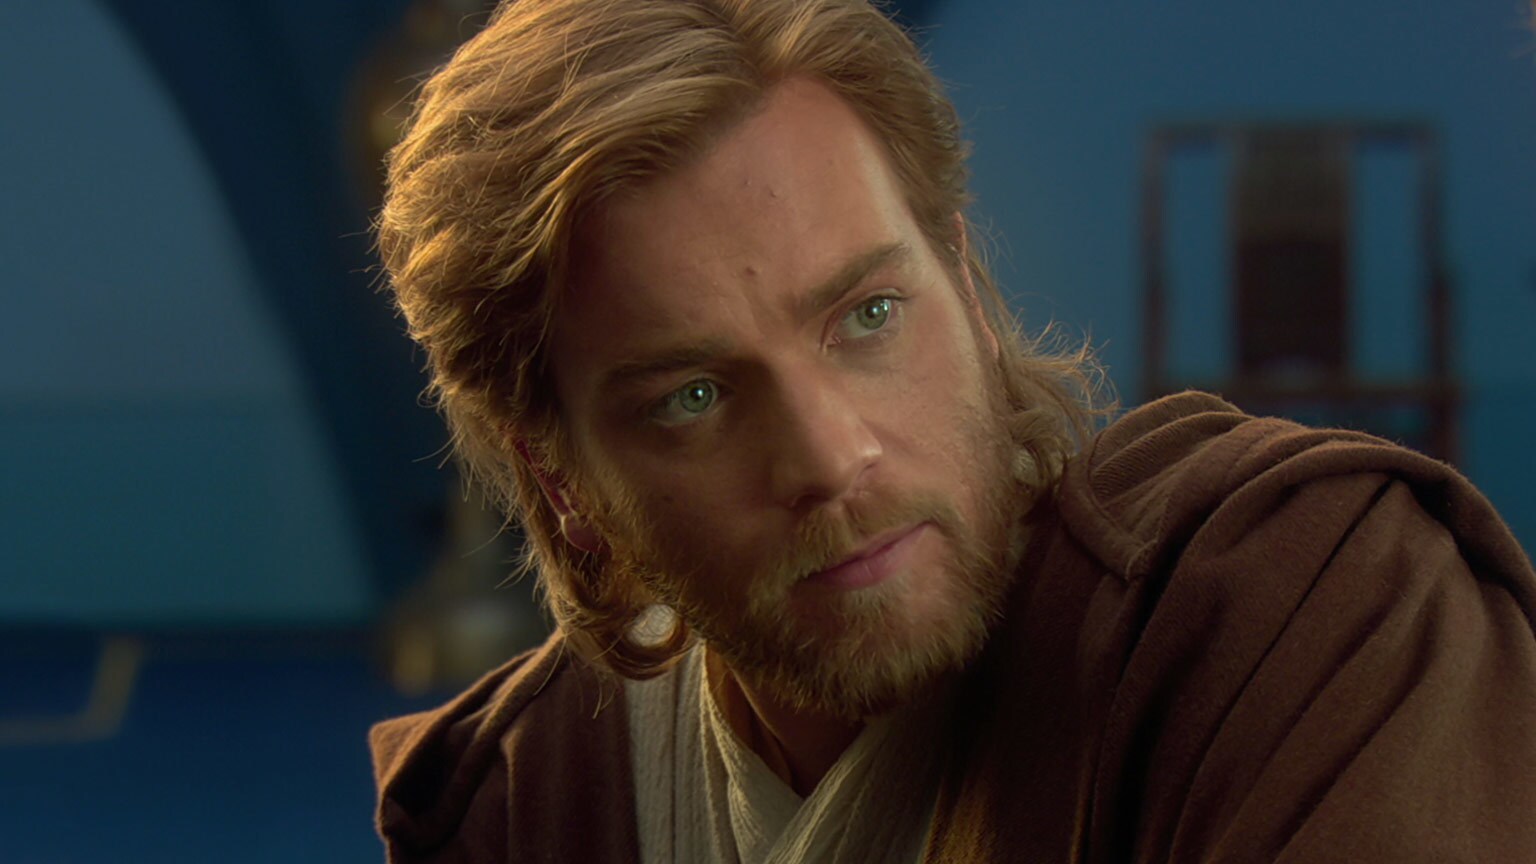 Quiz: Complete the Obi-Wan Kenobi Quote